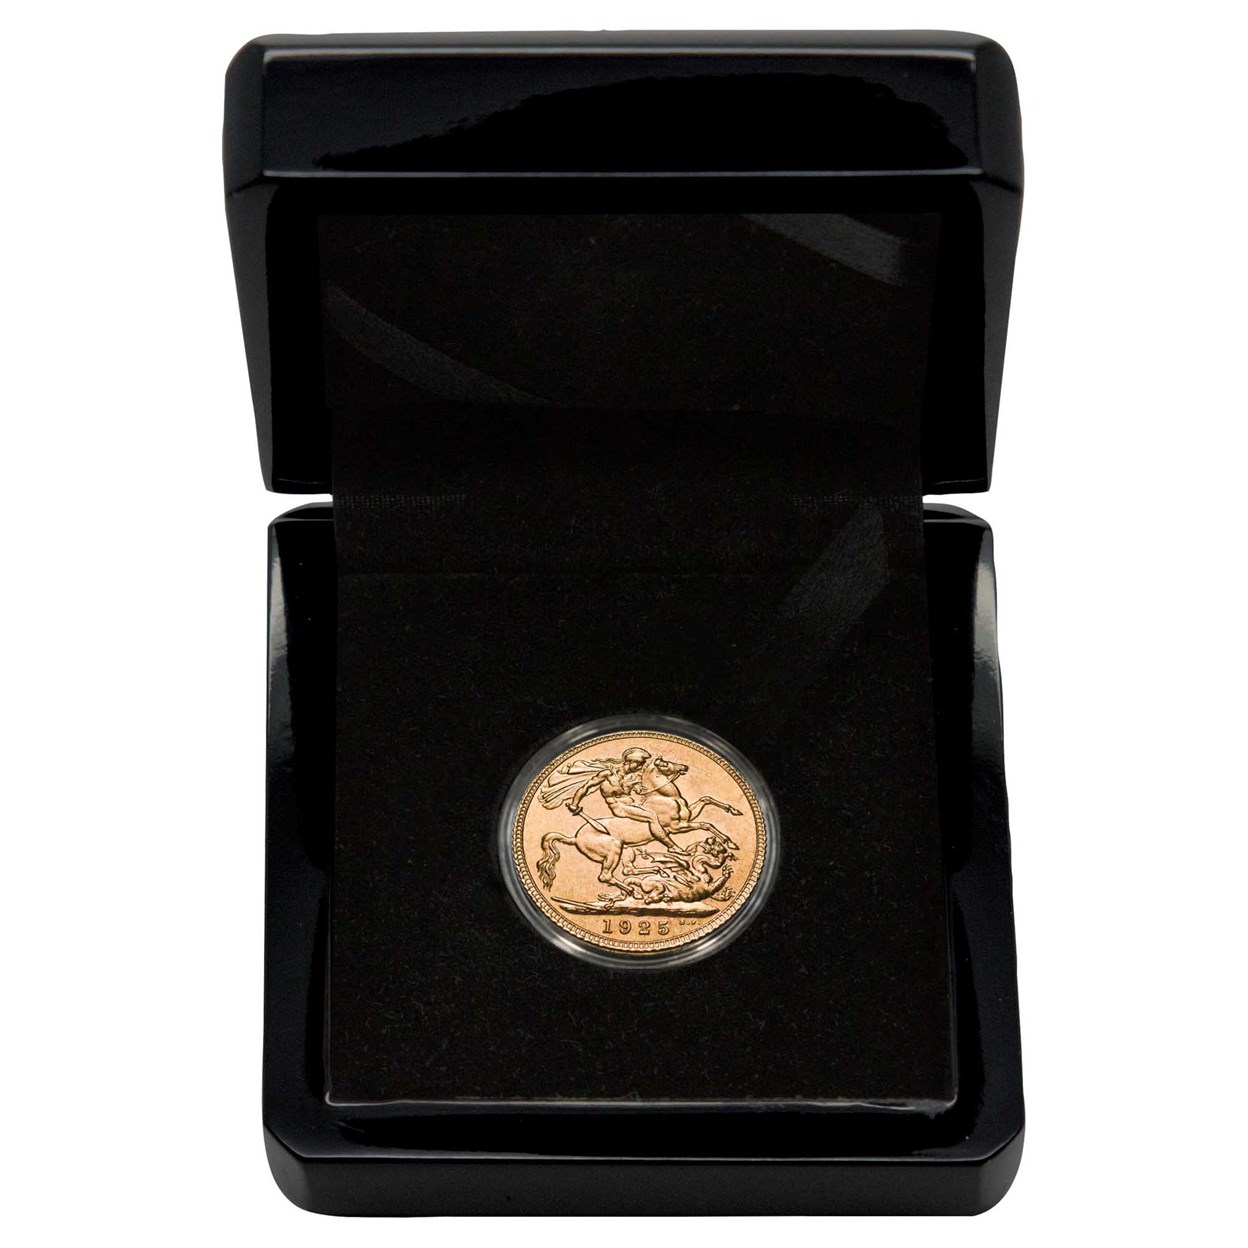 03 1925 king george v london mint sovereign 2018 gold InCase